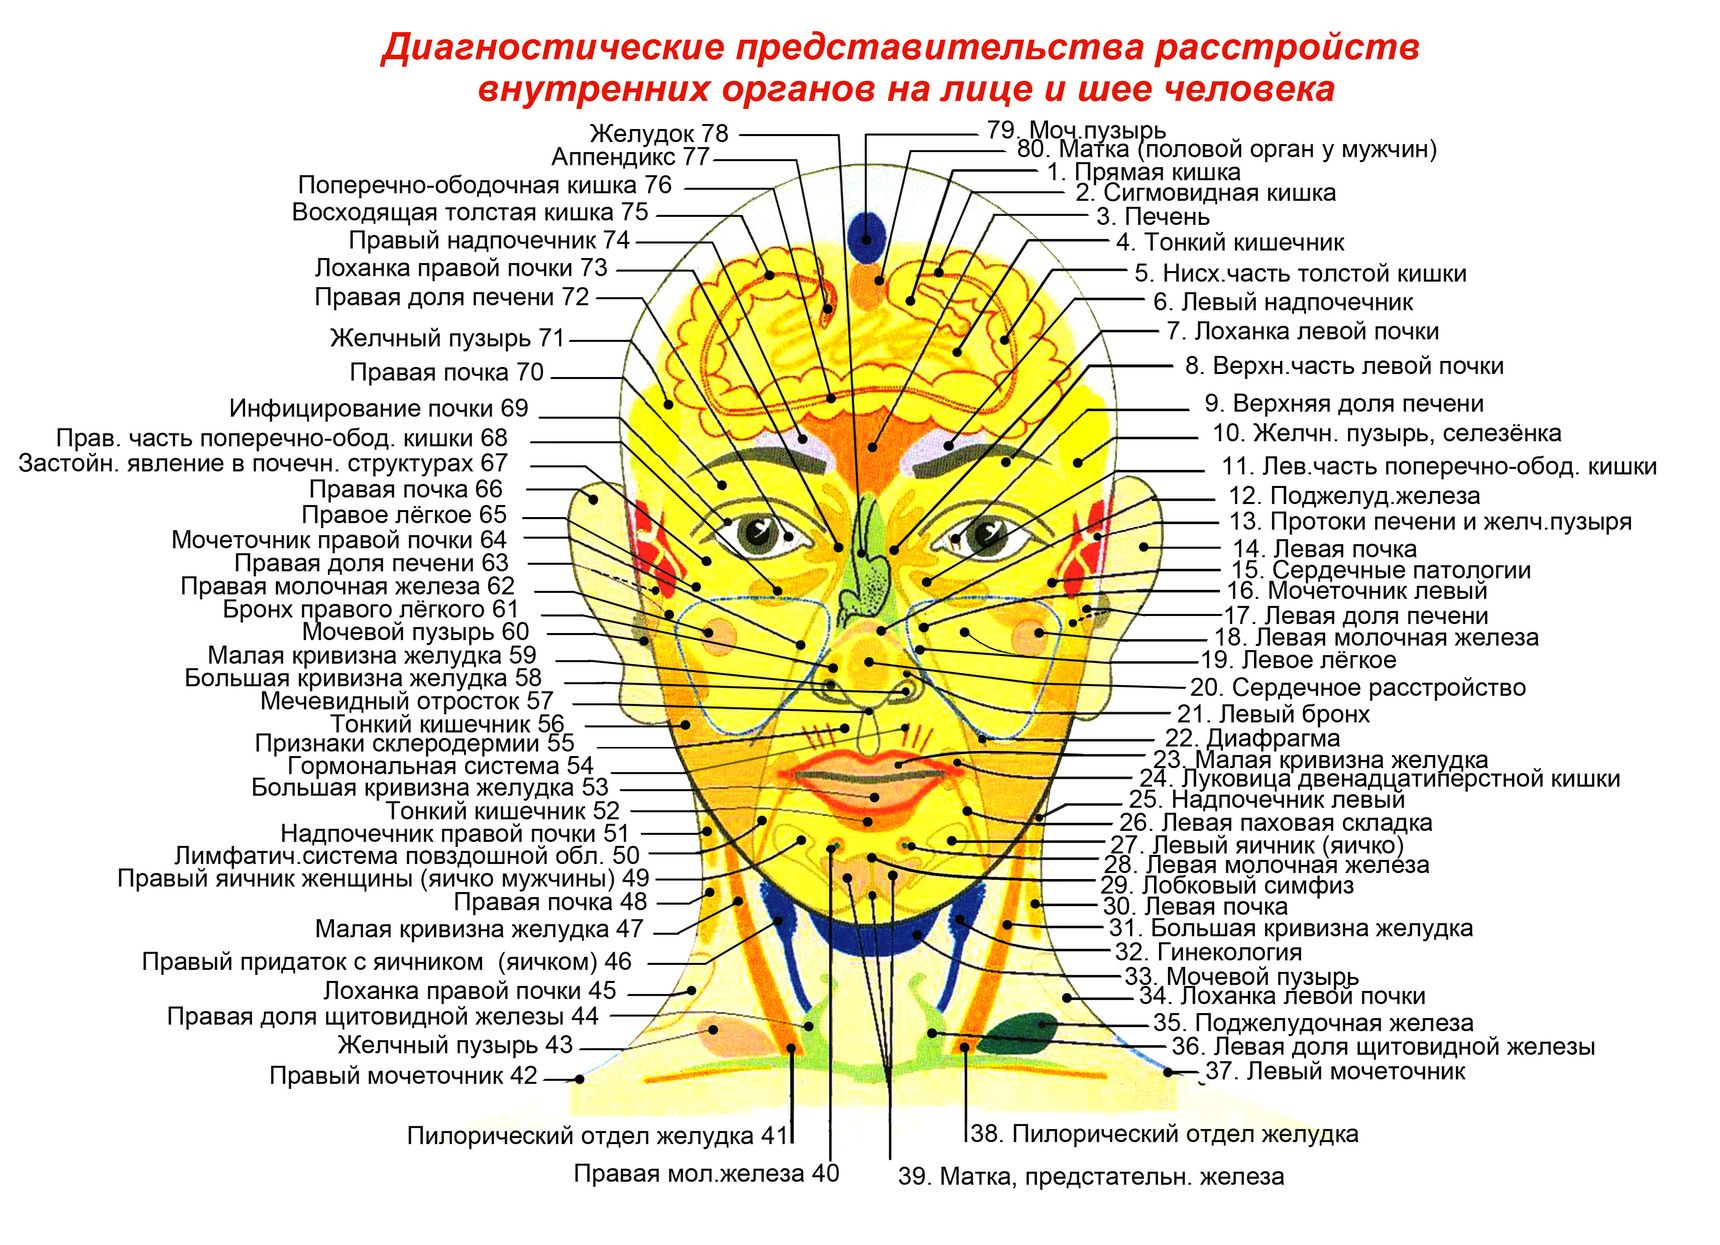 https://olgakulakovich.files.wordpress.com/2013/10/i1ts6.jpg